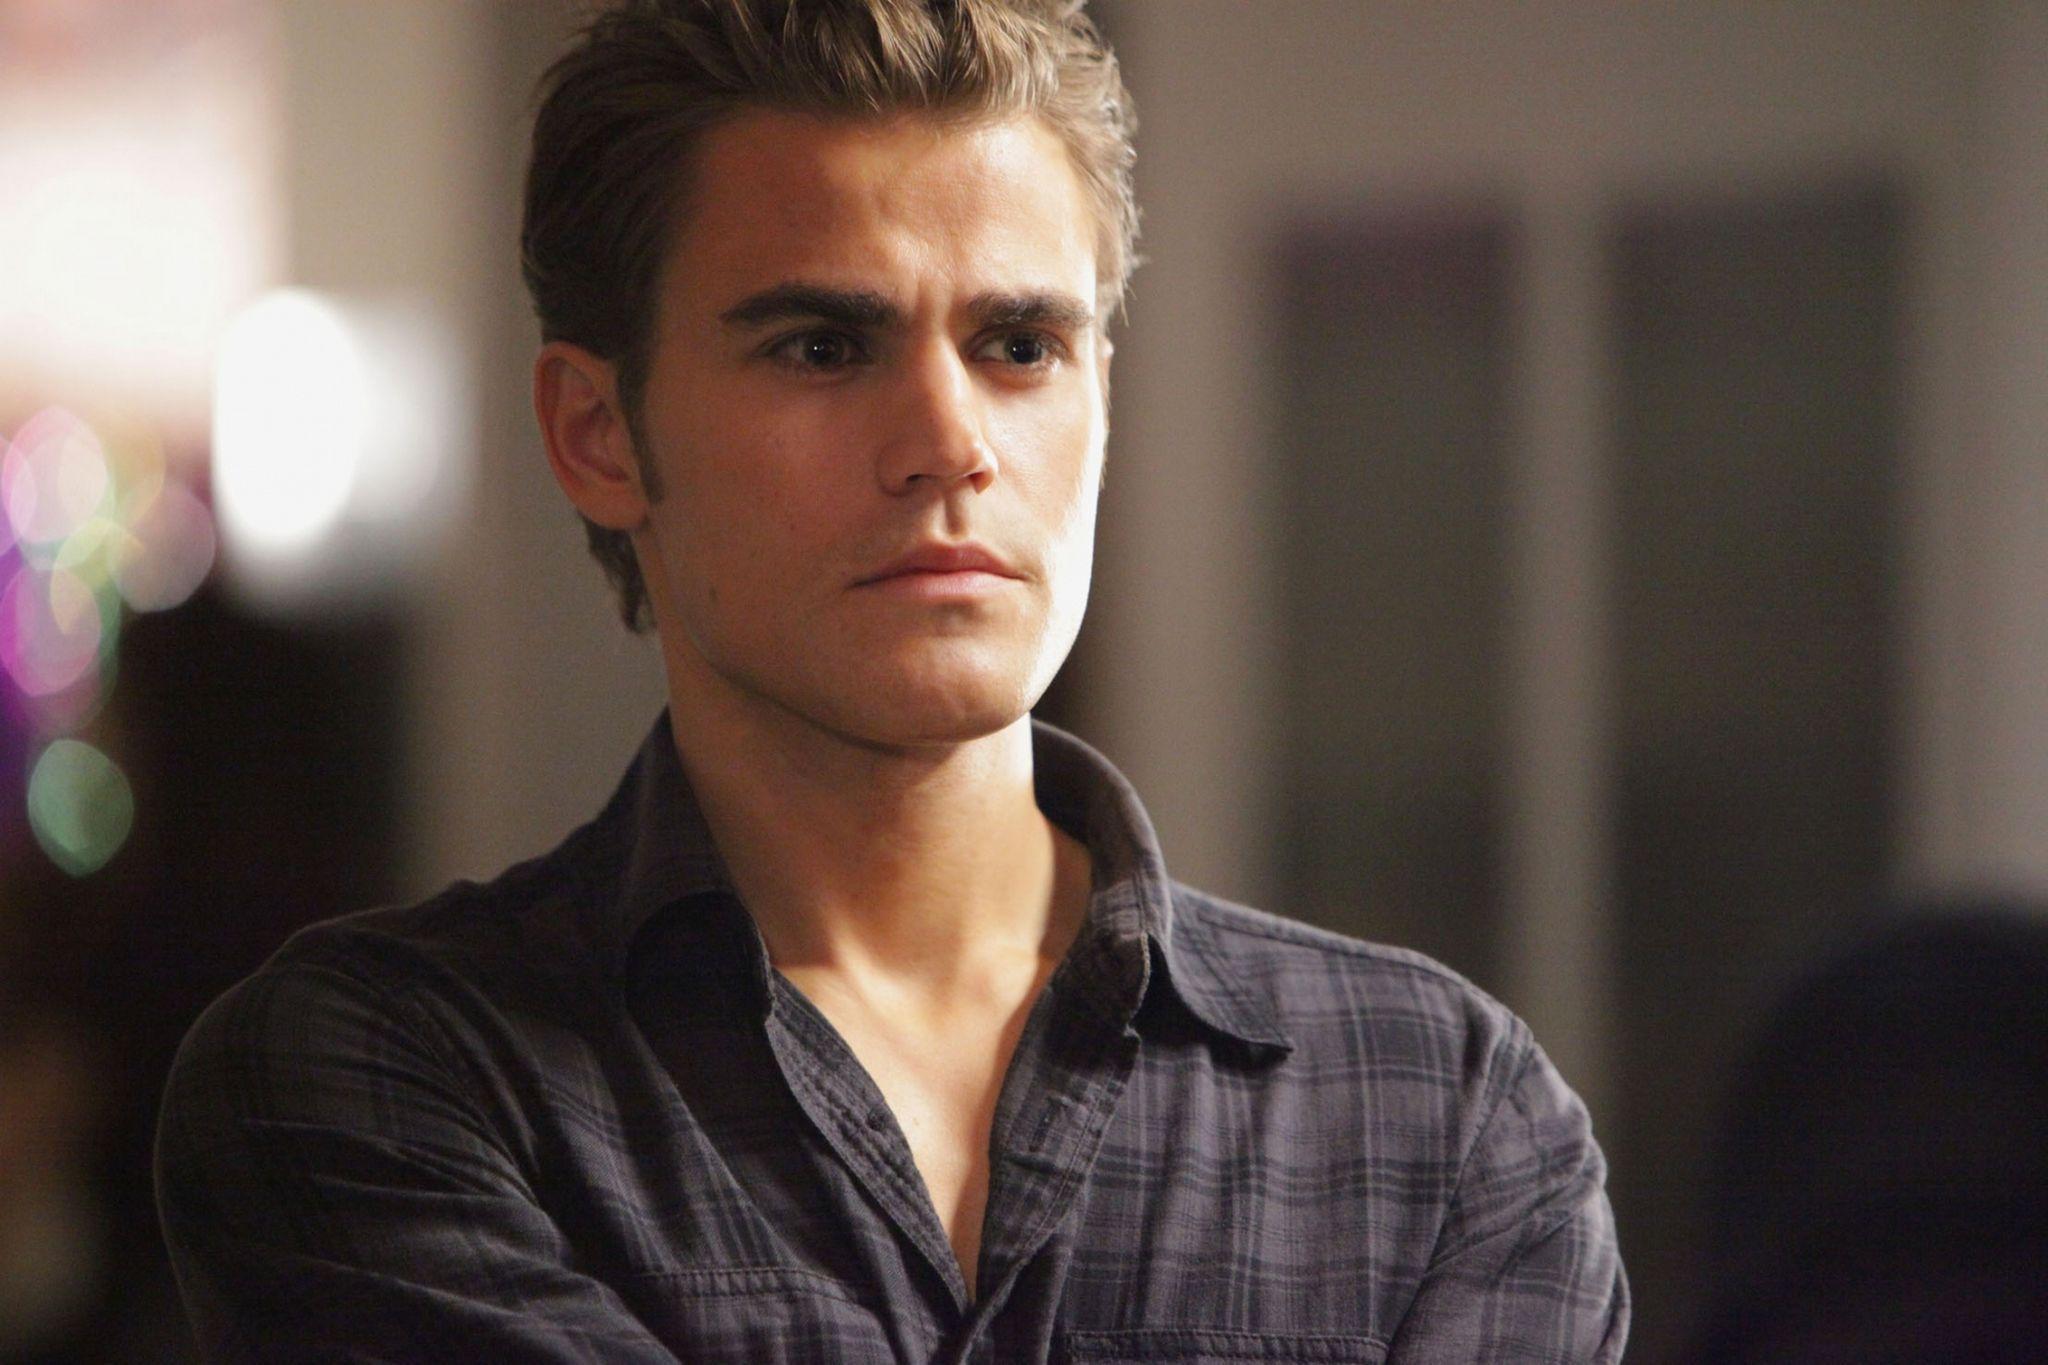 of Stefan Salvatore's saddest scenes from 'The Vampire Diaries'